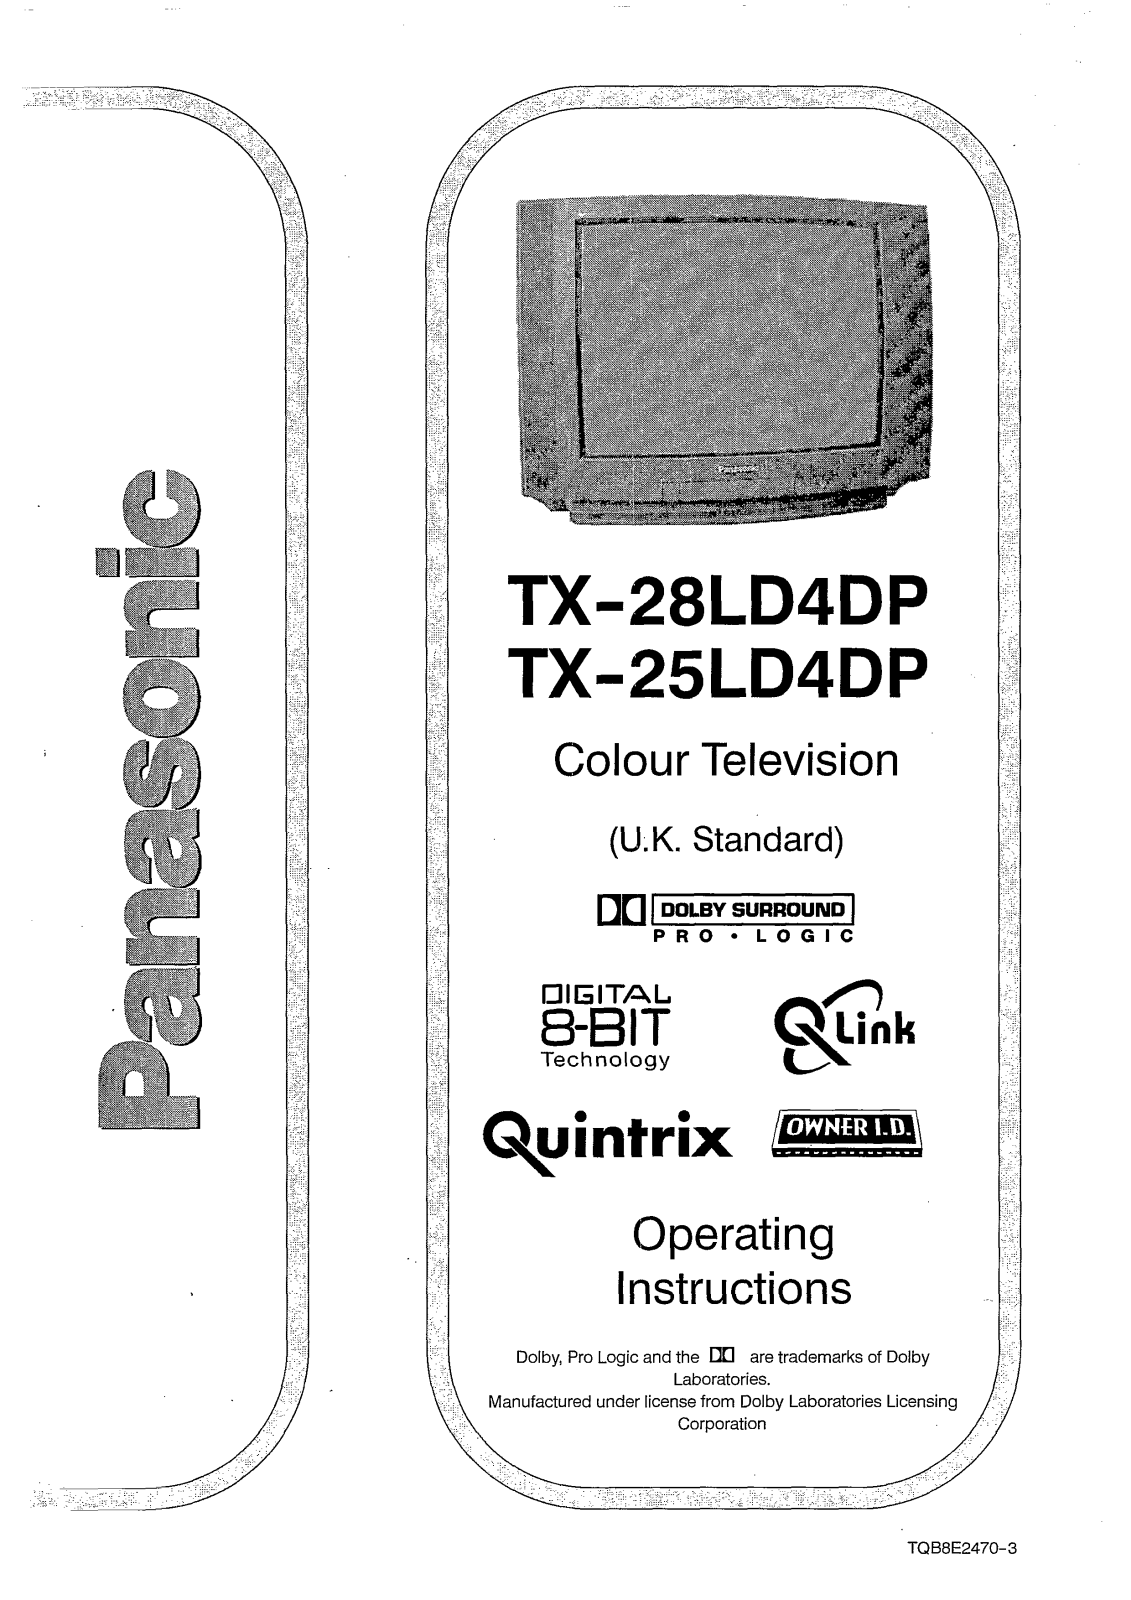 Panasonic TX-25LD4DP, TX-28LD4DP User Manual